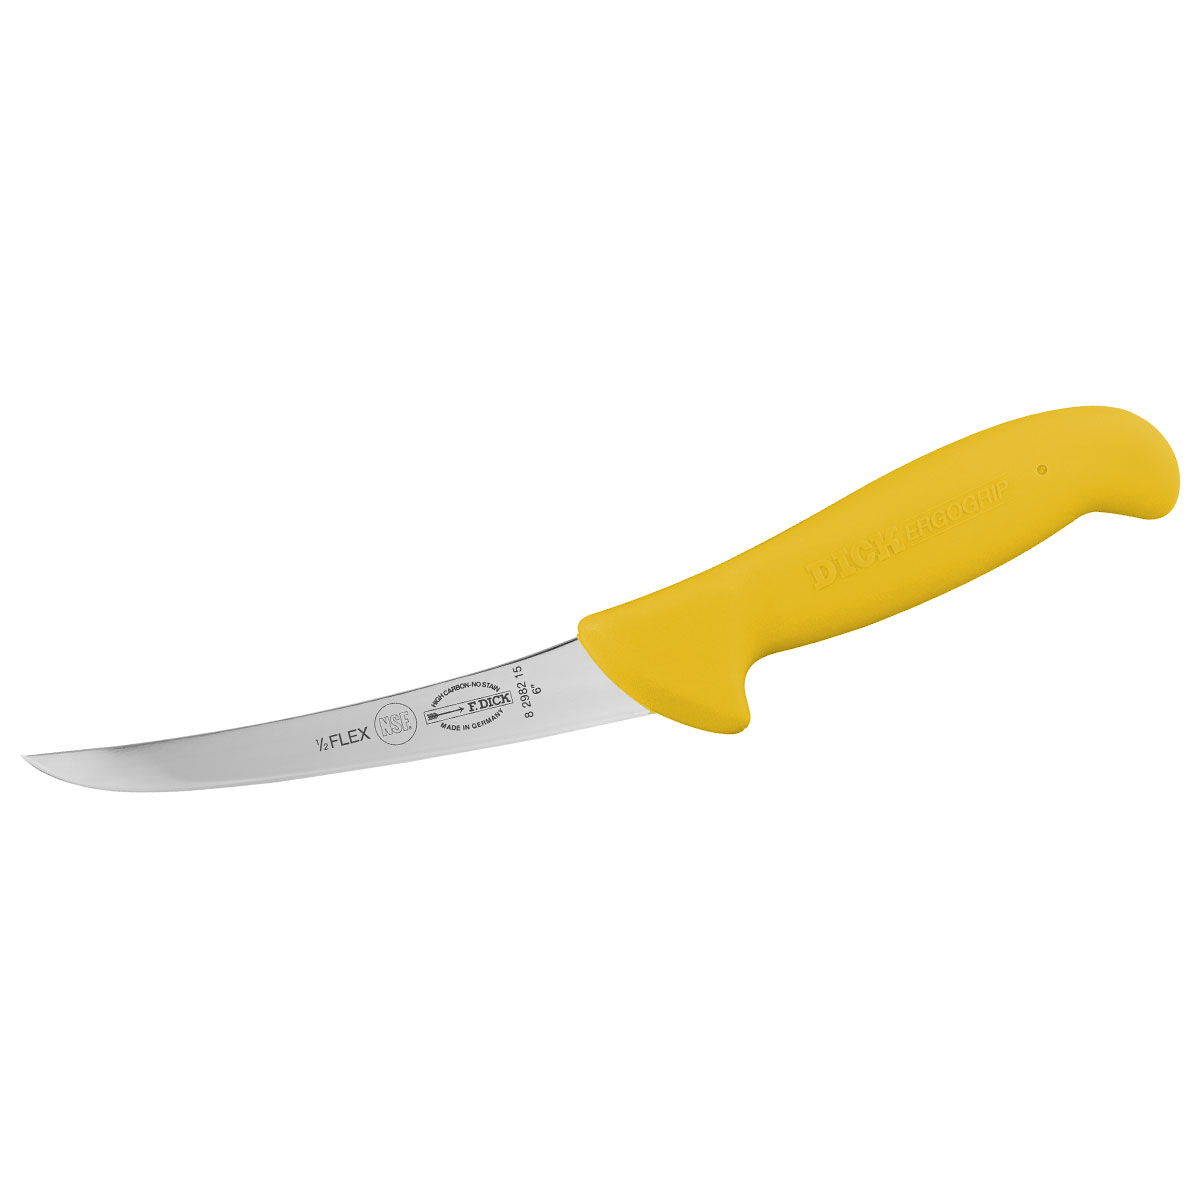 F.Dick Boning Knife, 15cm (6) - Curved, Narrow, Semi-Flexible, ErgoGrip - Yellow